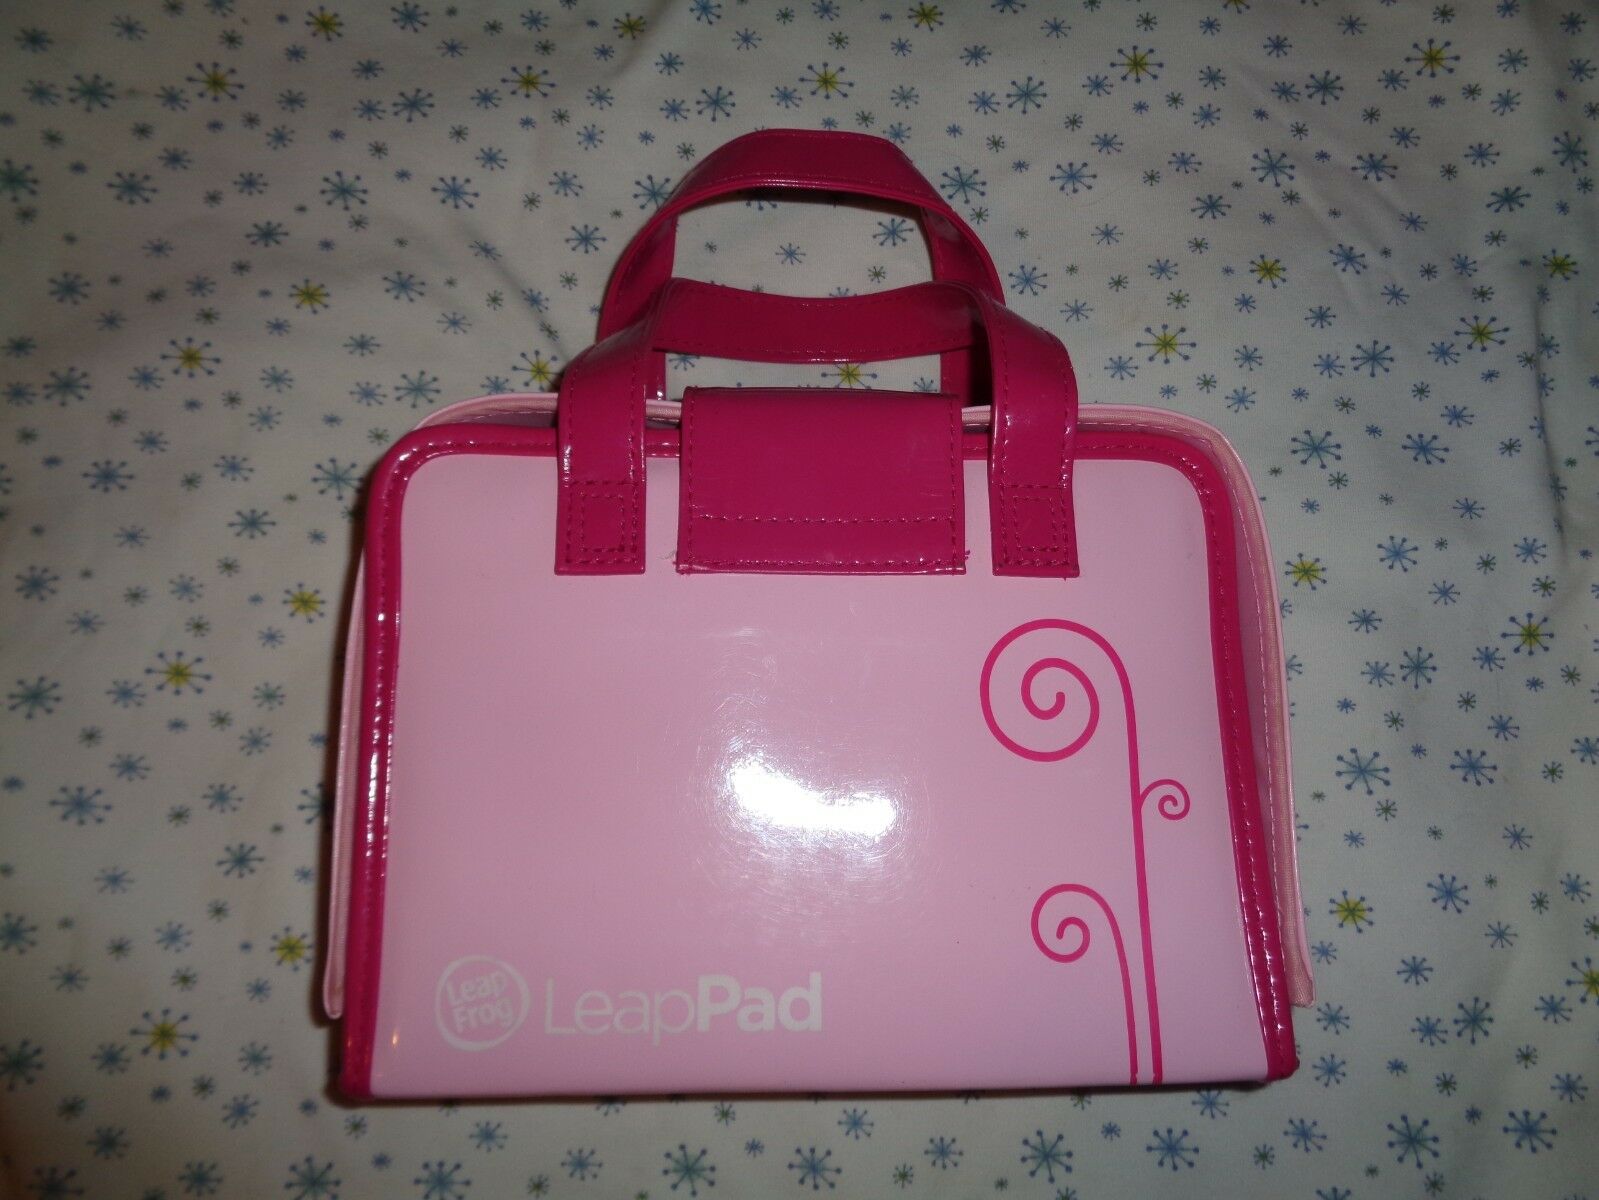 Leapfrog Leappad Explorer Kids Tablet Game System Pink Carrying Case #a